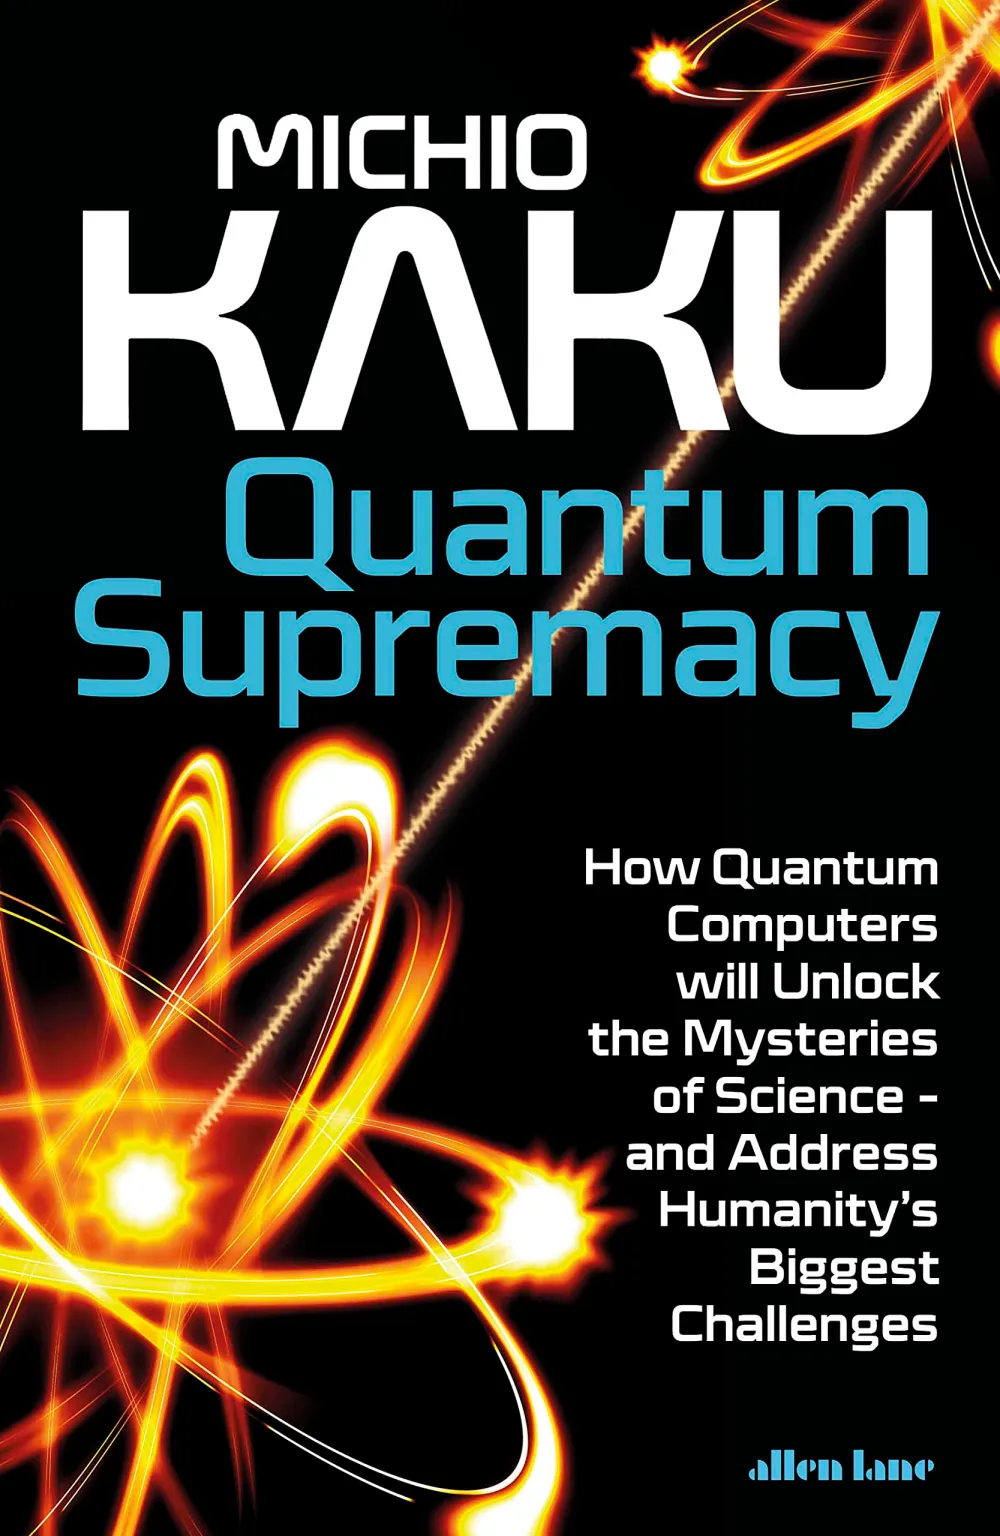 Michio Kaku - Quantum supremacy - book